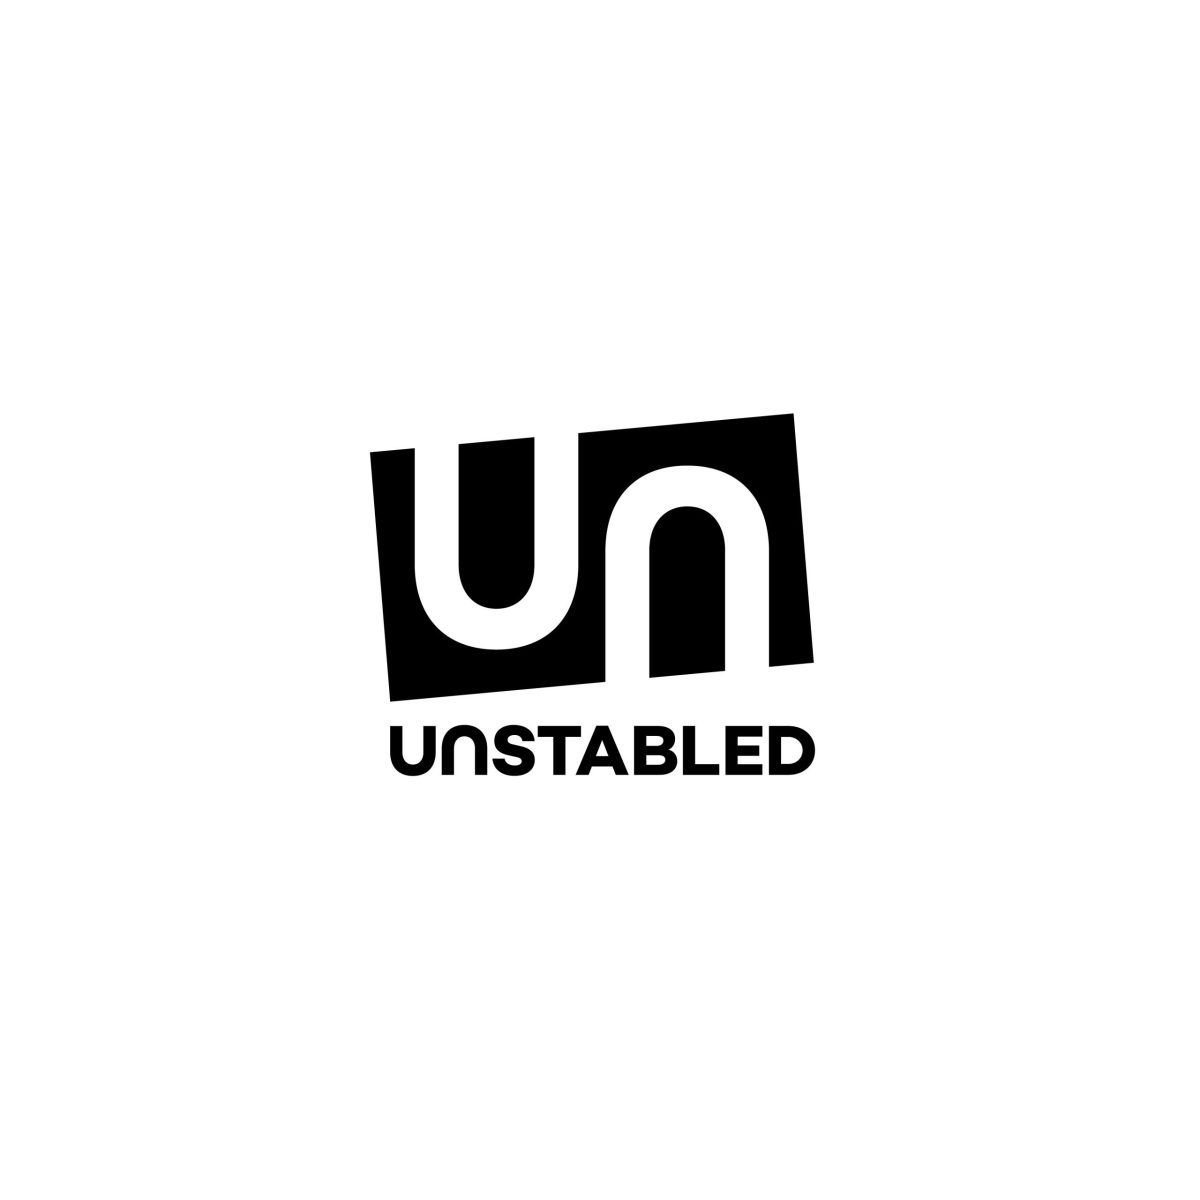 Logo__Unstabled__vert__mono__black